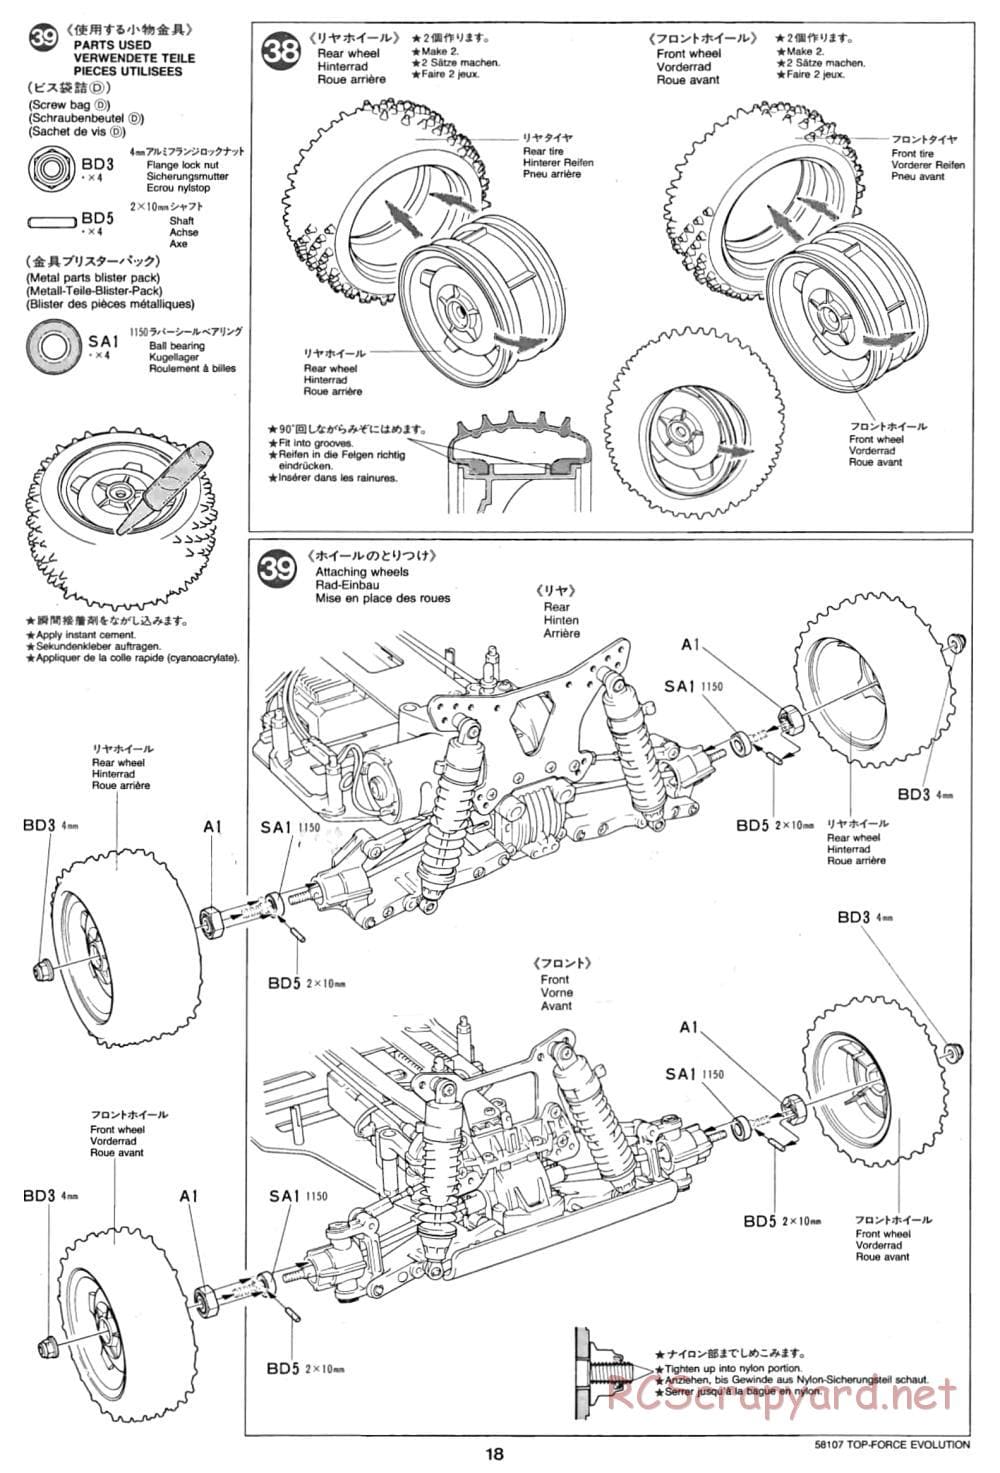 Tamiya - Top Force Evolution Chassis - Manual - Page 18